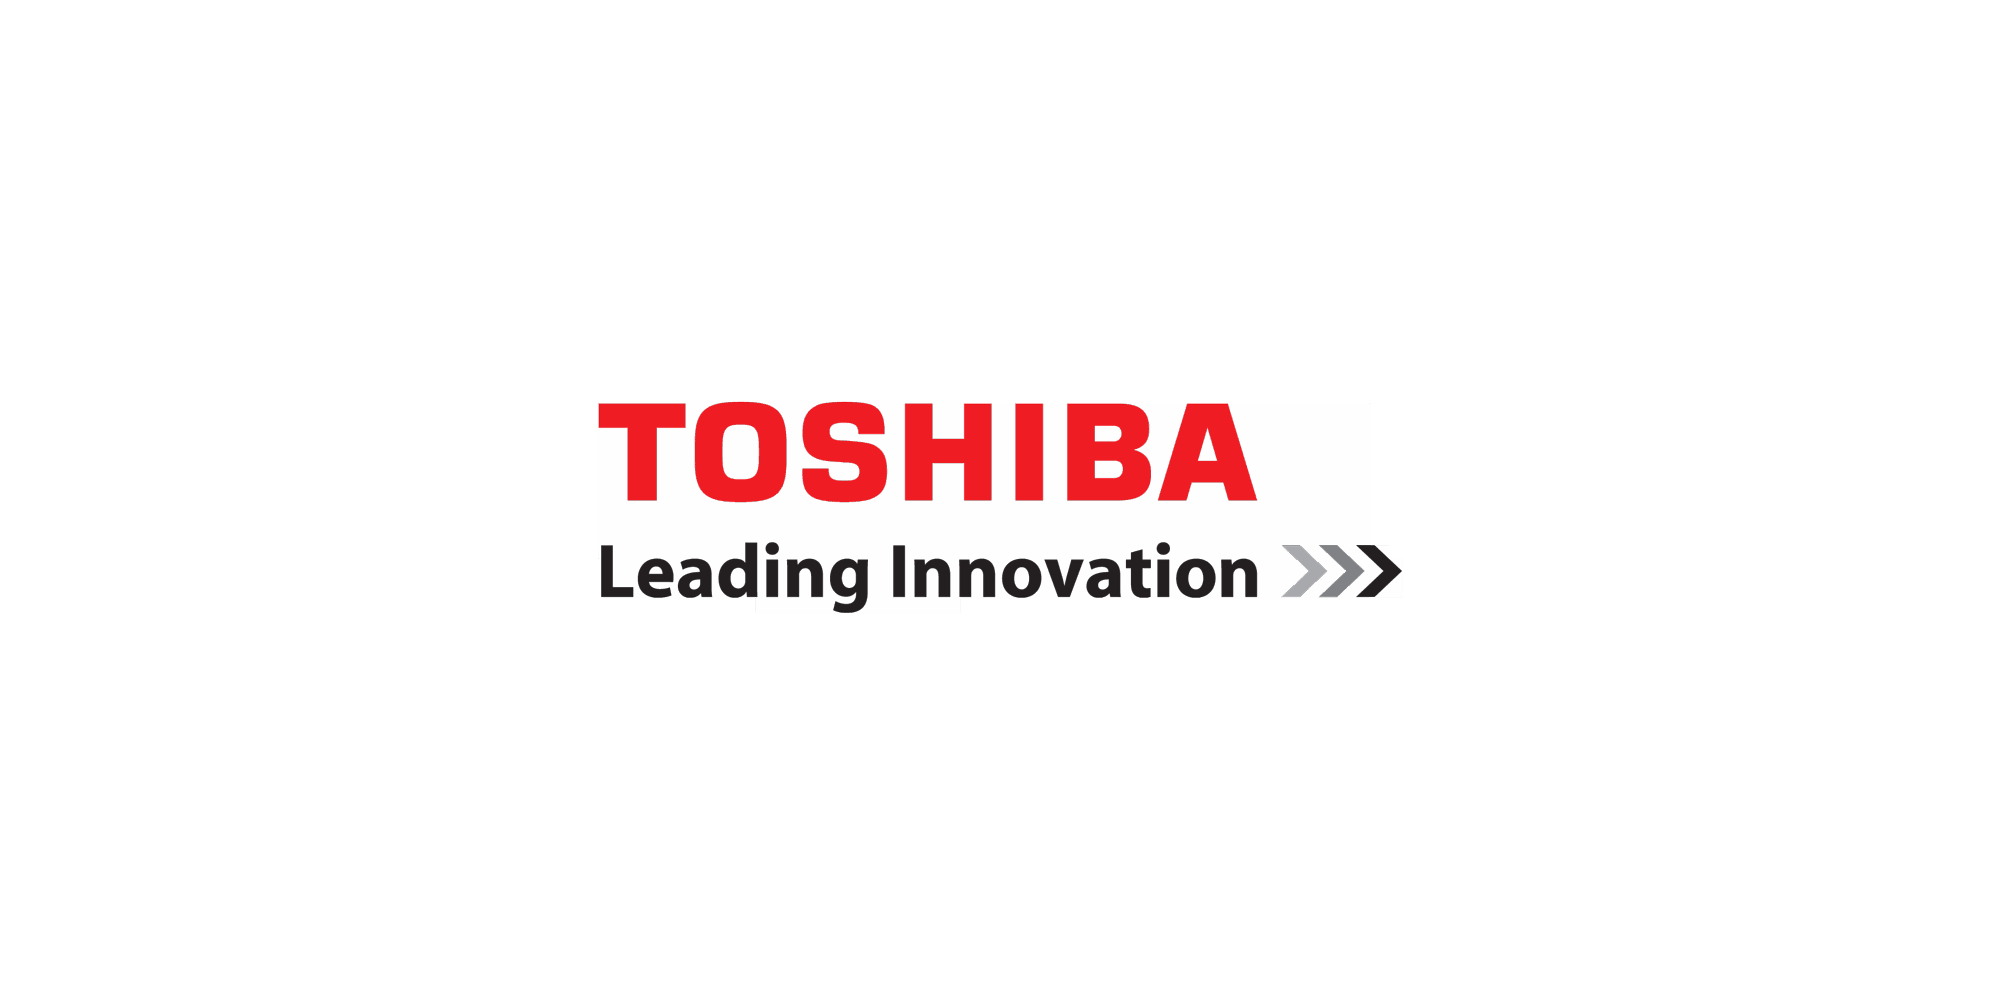 Toshiba Logo - Toshiba Leading Innovation Logo Public Relations